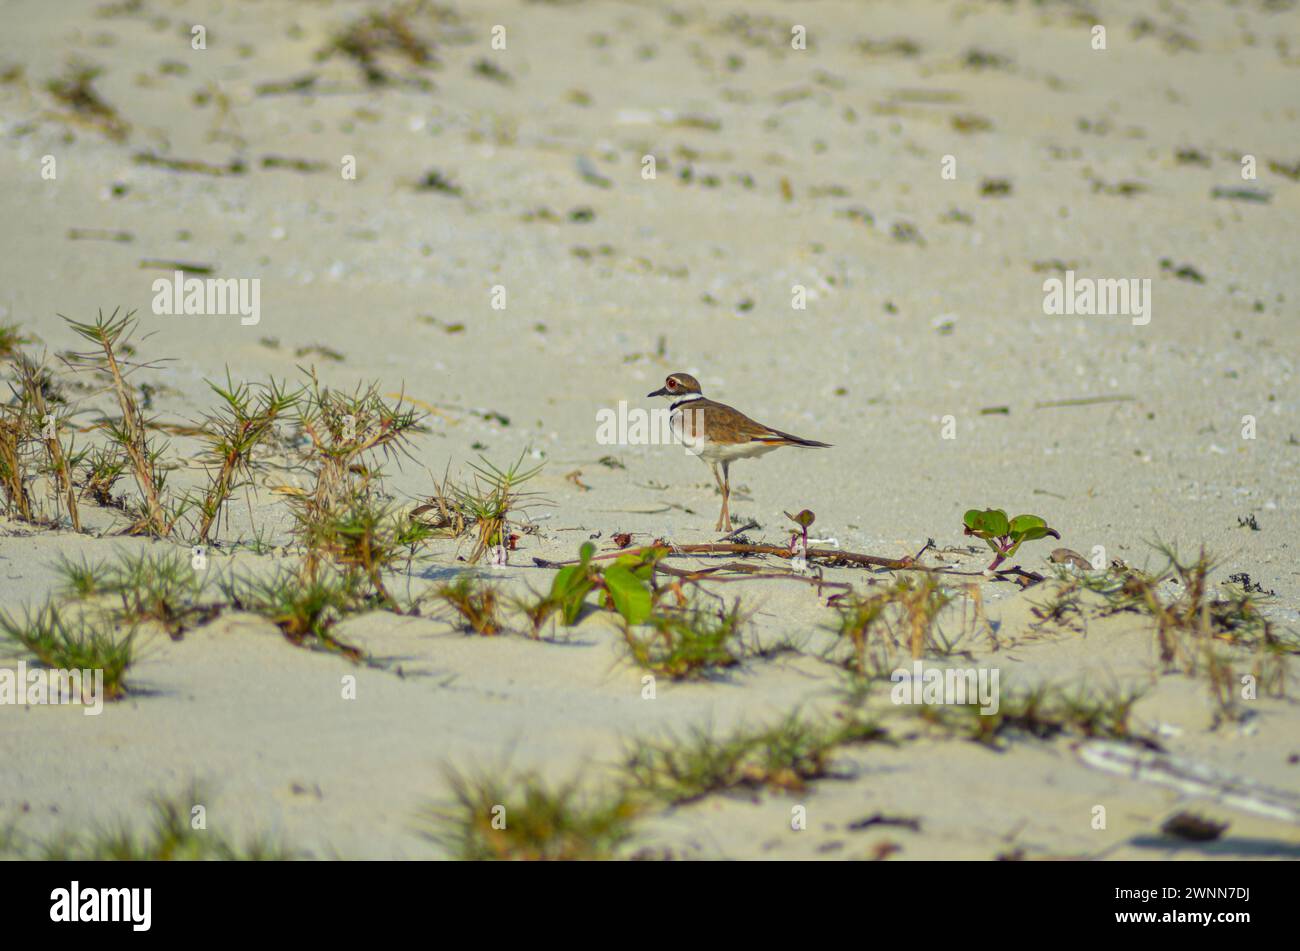 Killdeer walking on the sandy beach among the little bits of green grass. Stock Photo